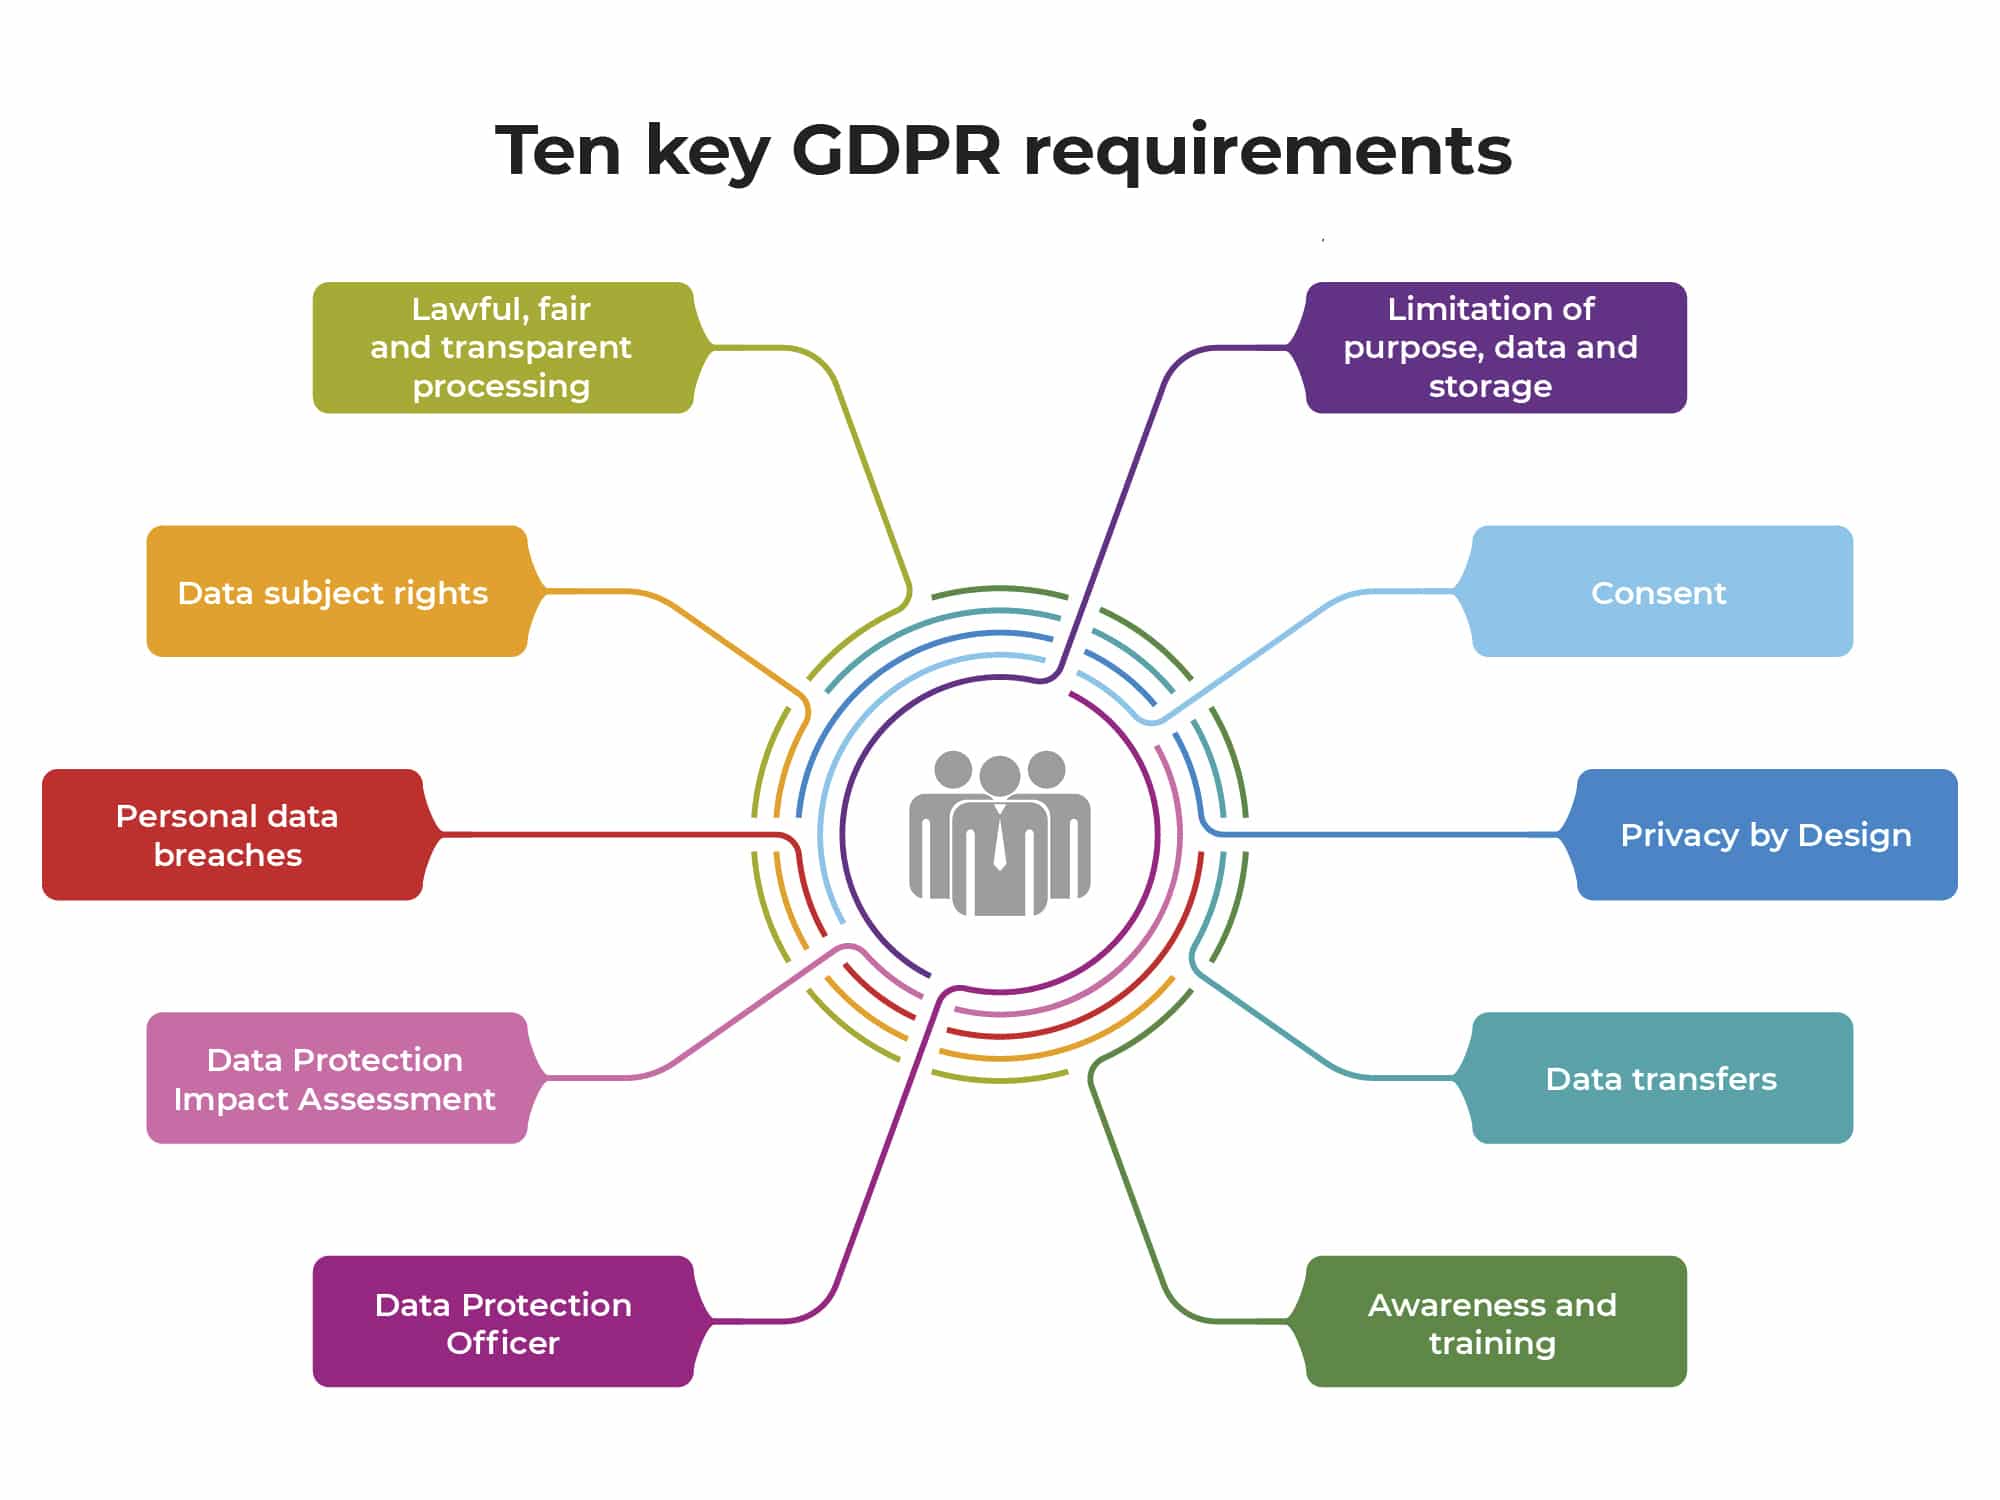 10 key GDPR requirements: A short summary